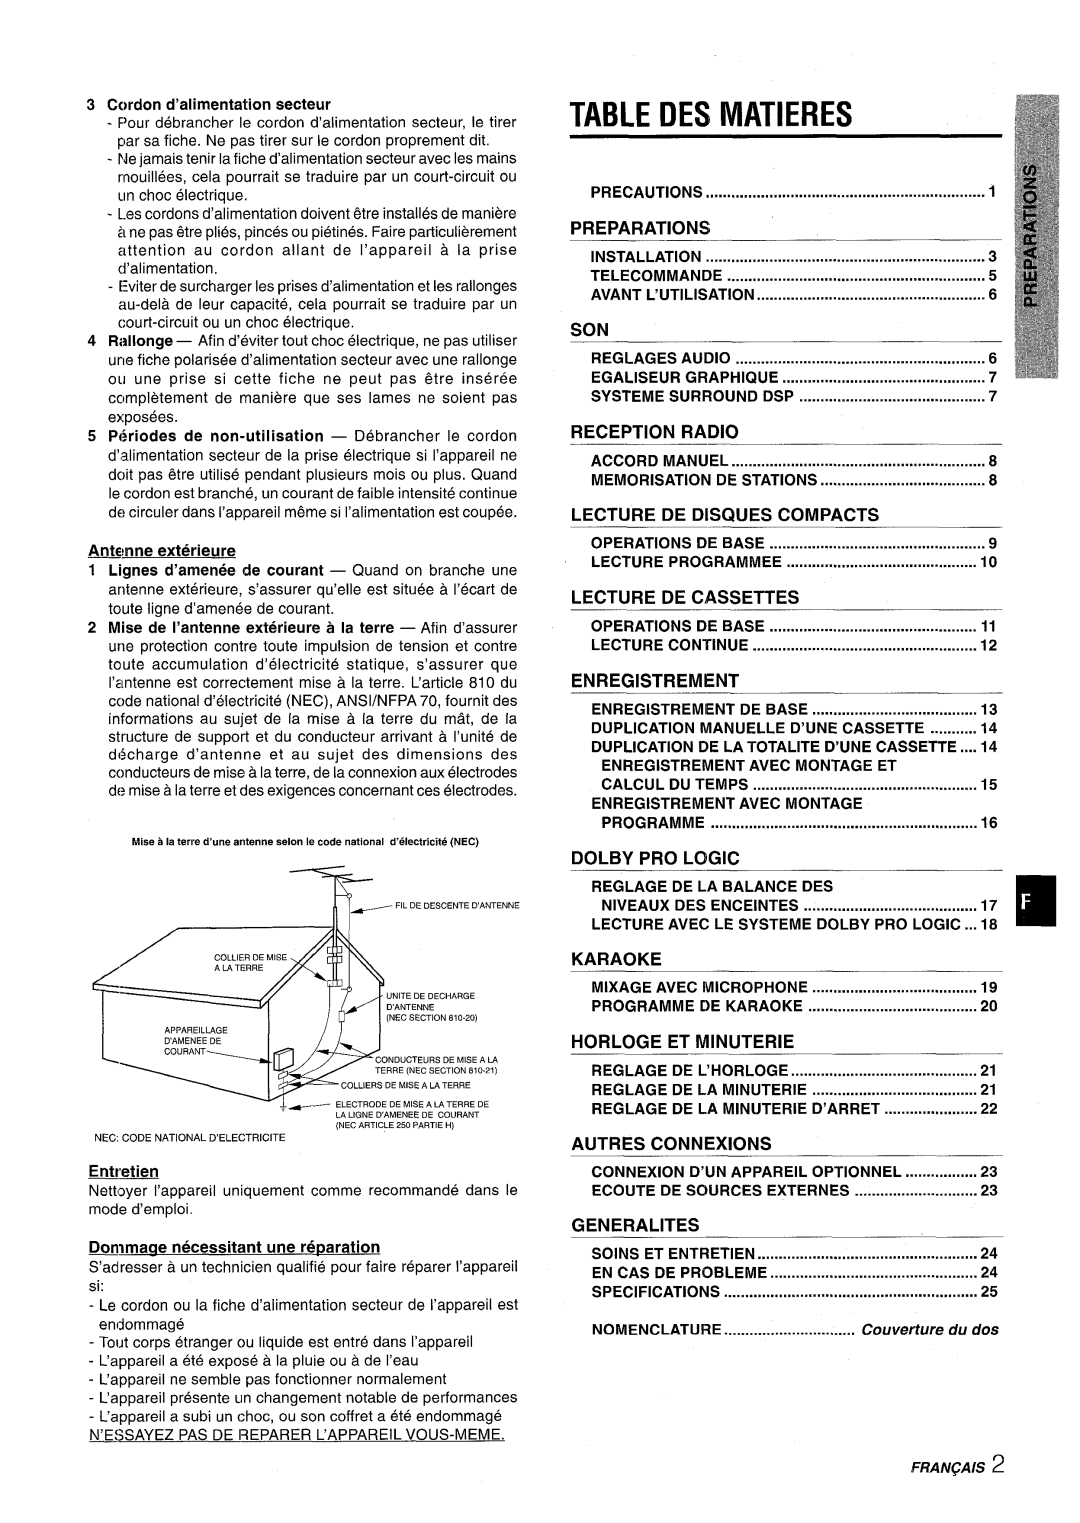 Aiwa CX-NMT50 manual Des Matieres, Preparations, Installation, Telecommande, Avant L’Utilisation, Reception, Radio, Lecture 